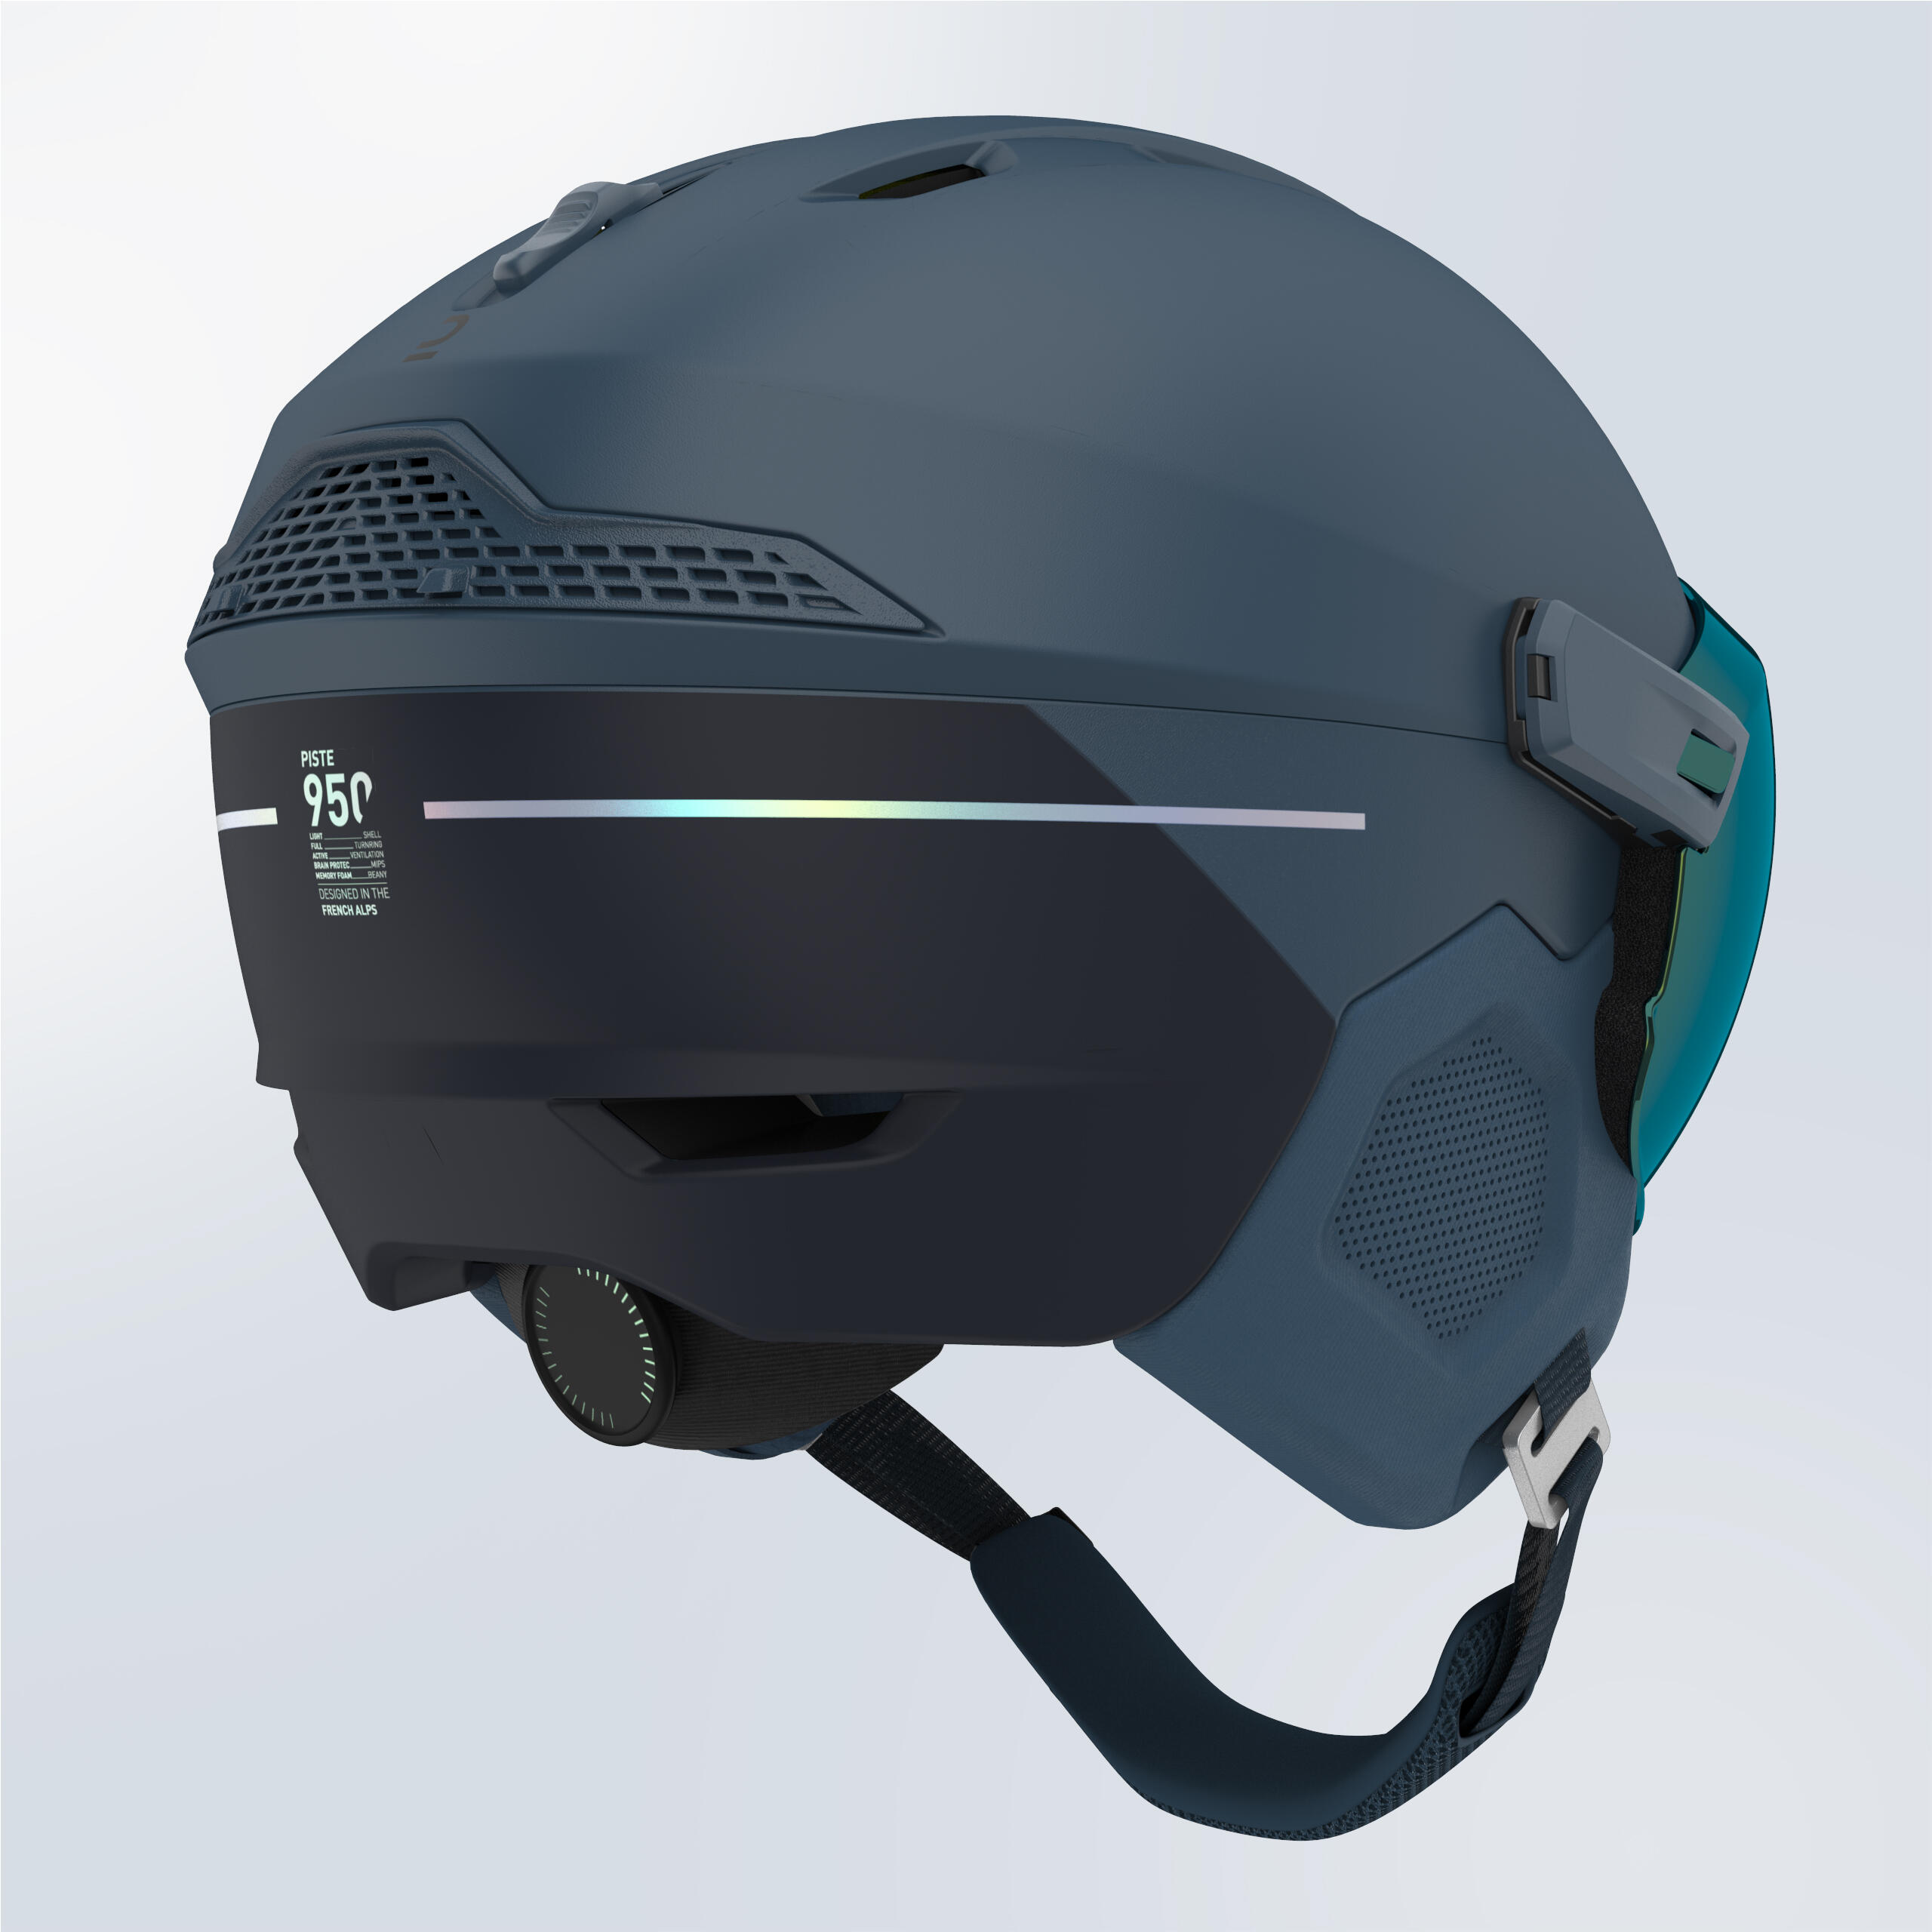 PST 950 MIPS Adult ski helmet with visor - blue  4/8